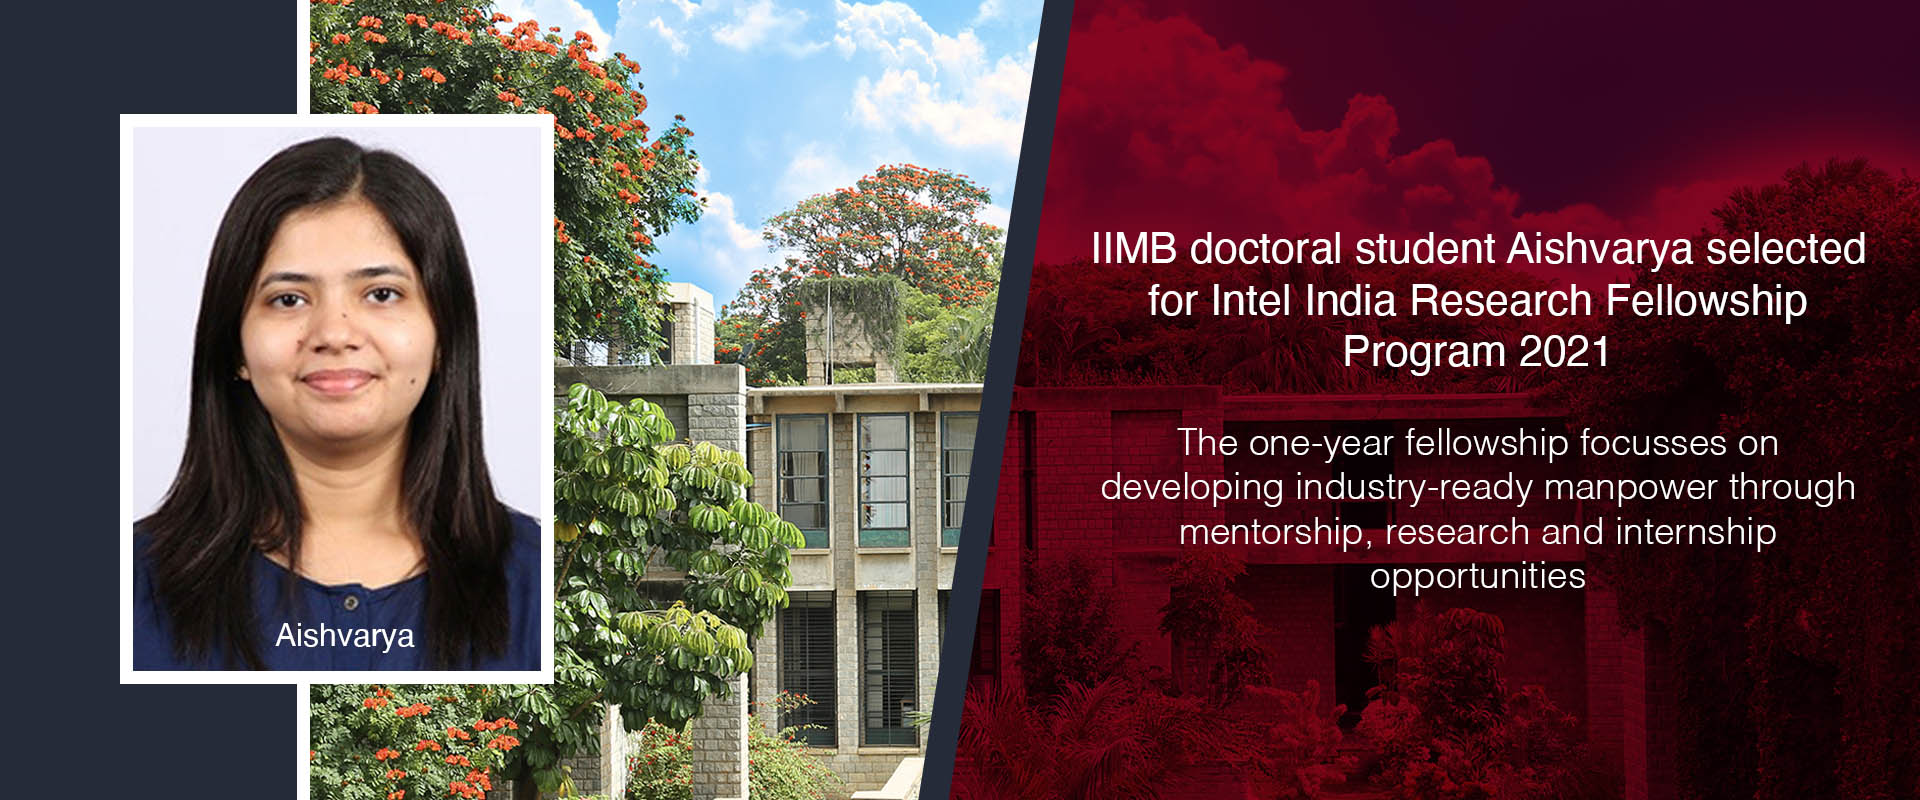 IIMB doctoral student Aishvarya selected for Intel India Research Fellowship Program 2021